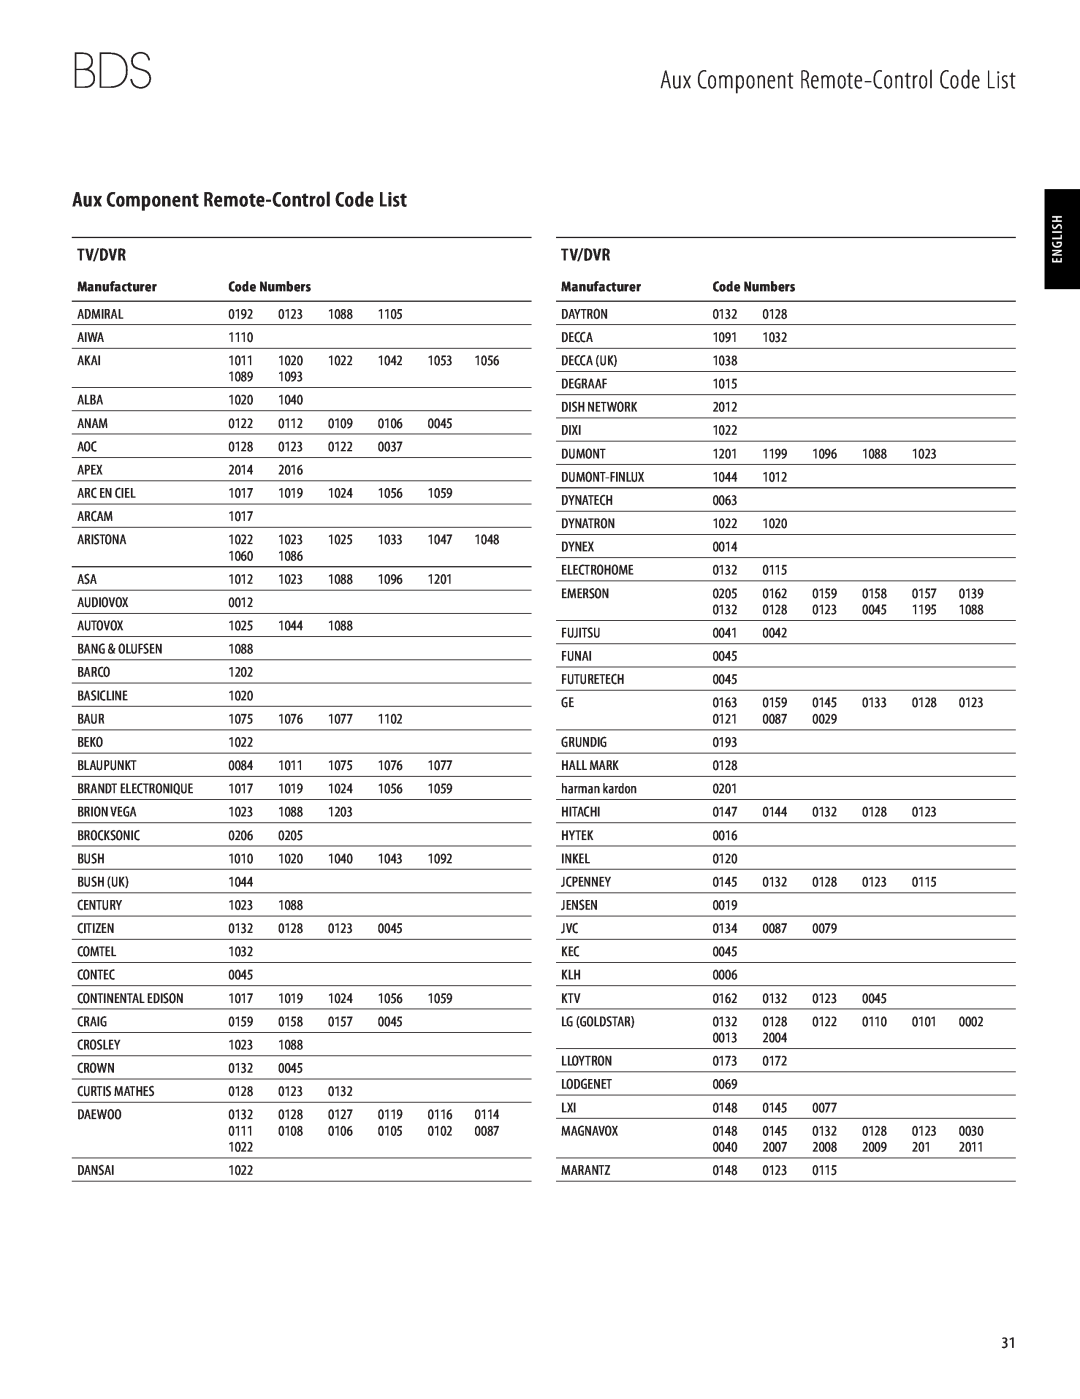 Harman-Kardon 950-0321-001 owner manual Aux Component Remote-ControlCode List, Tv/Dvr, English, Manufacturer 